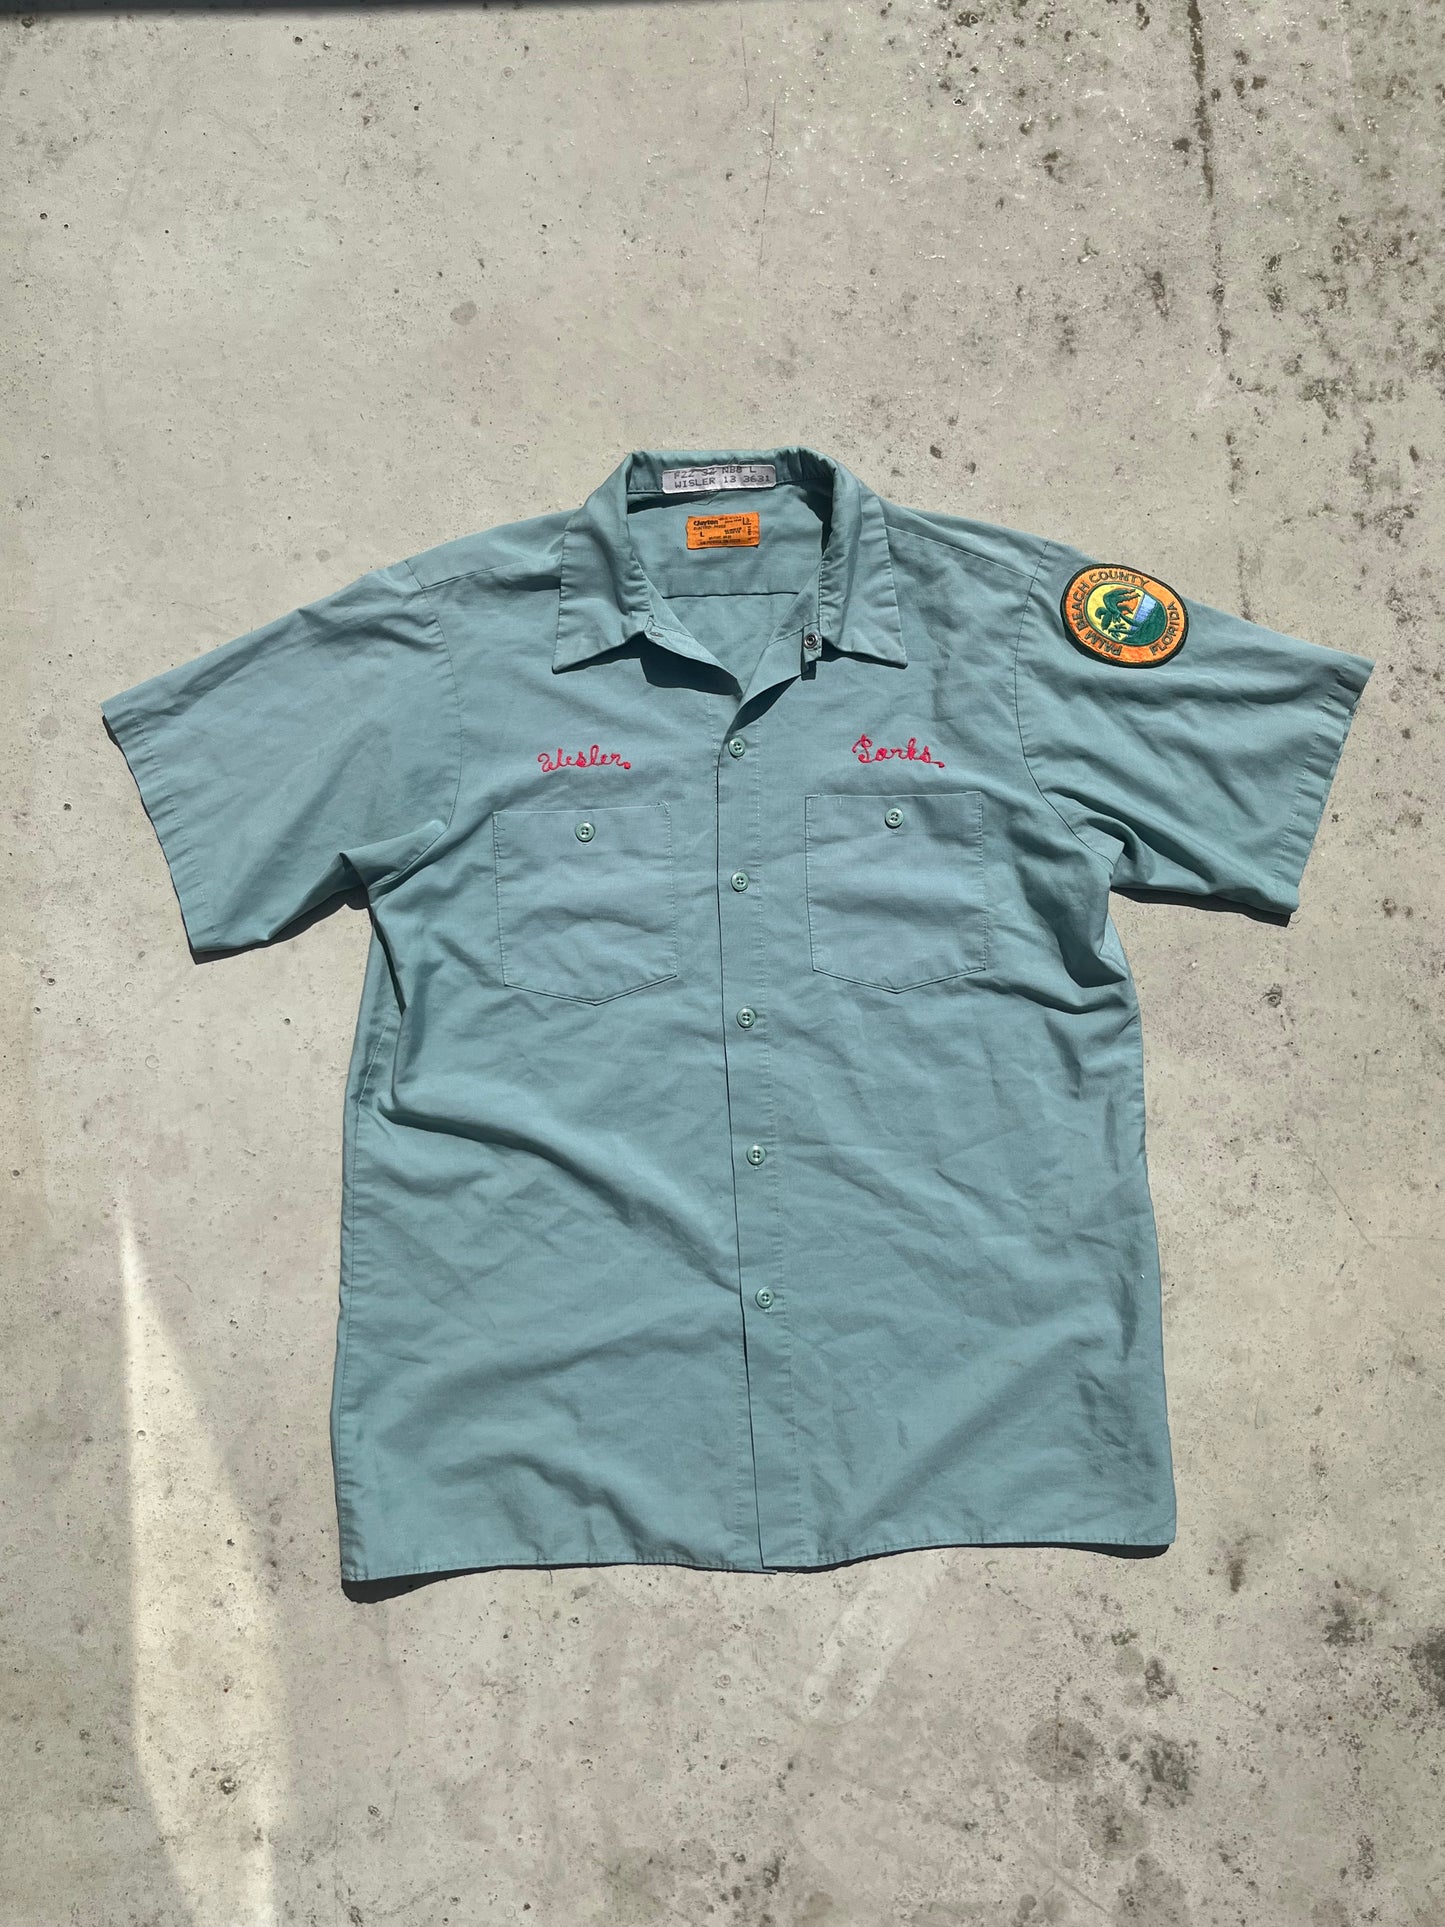 Vintage 80’s Patrol Shirt